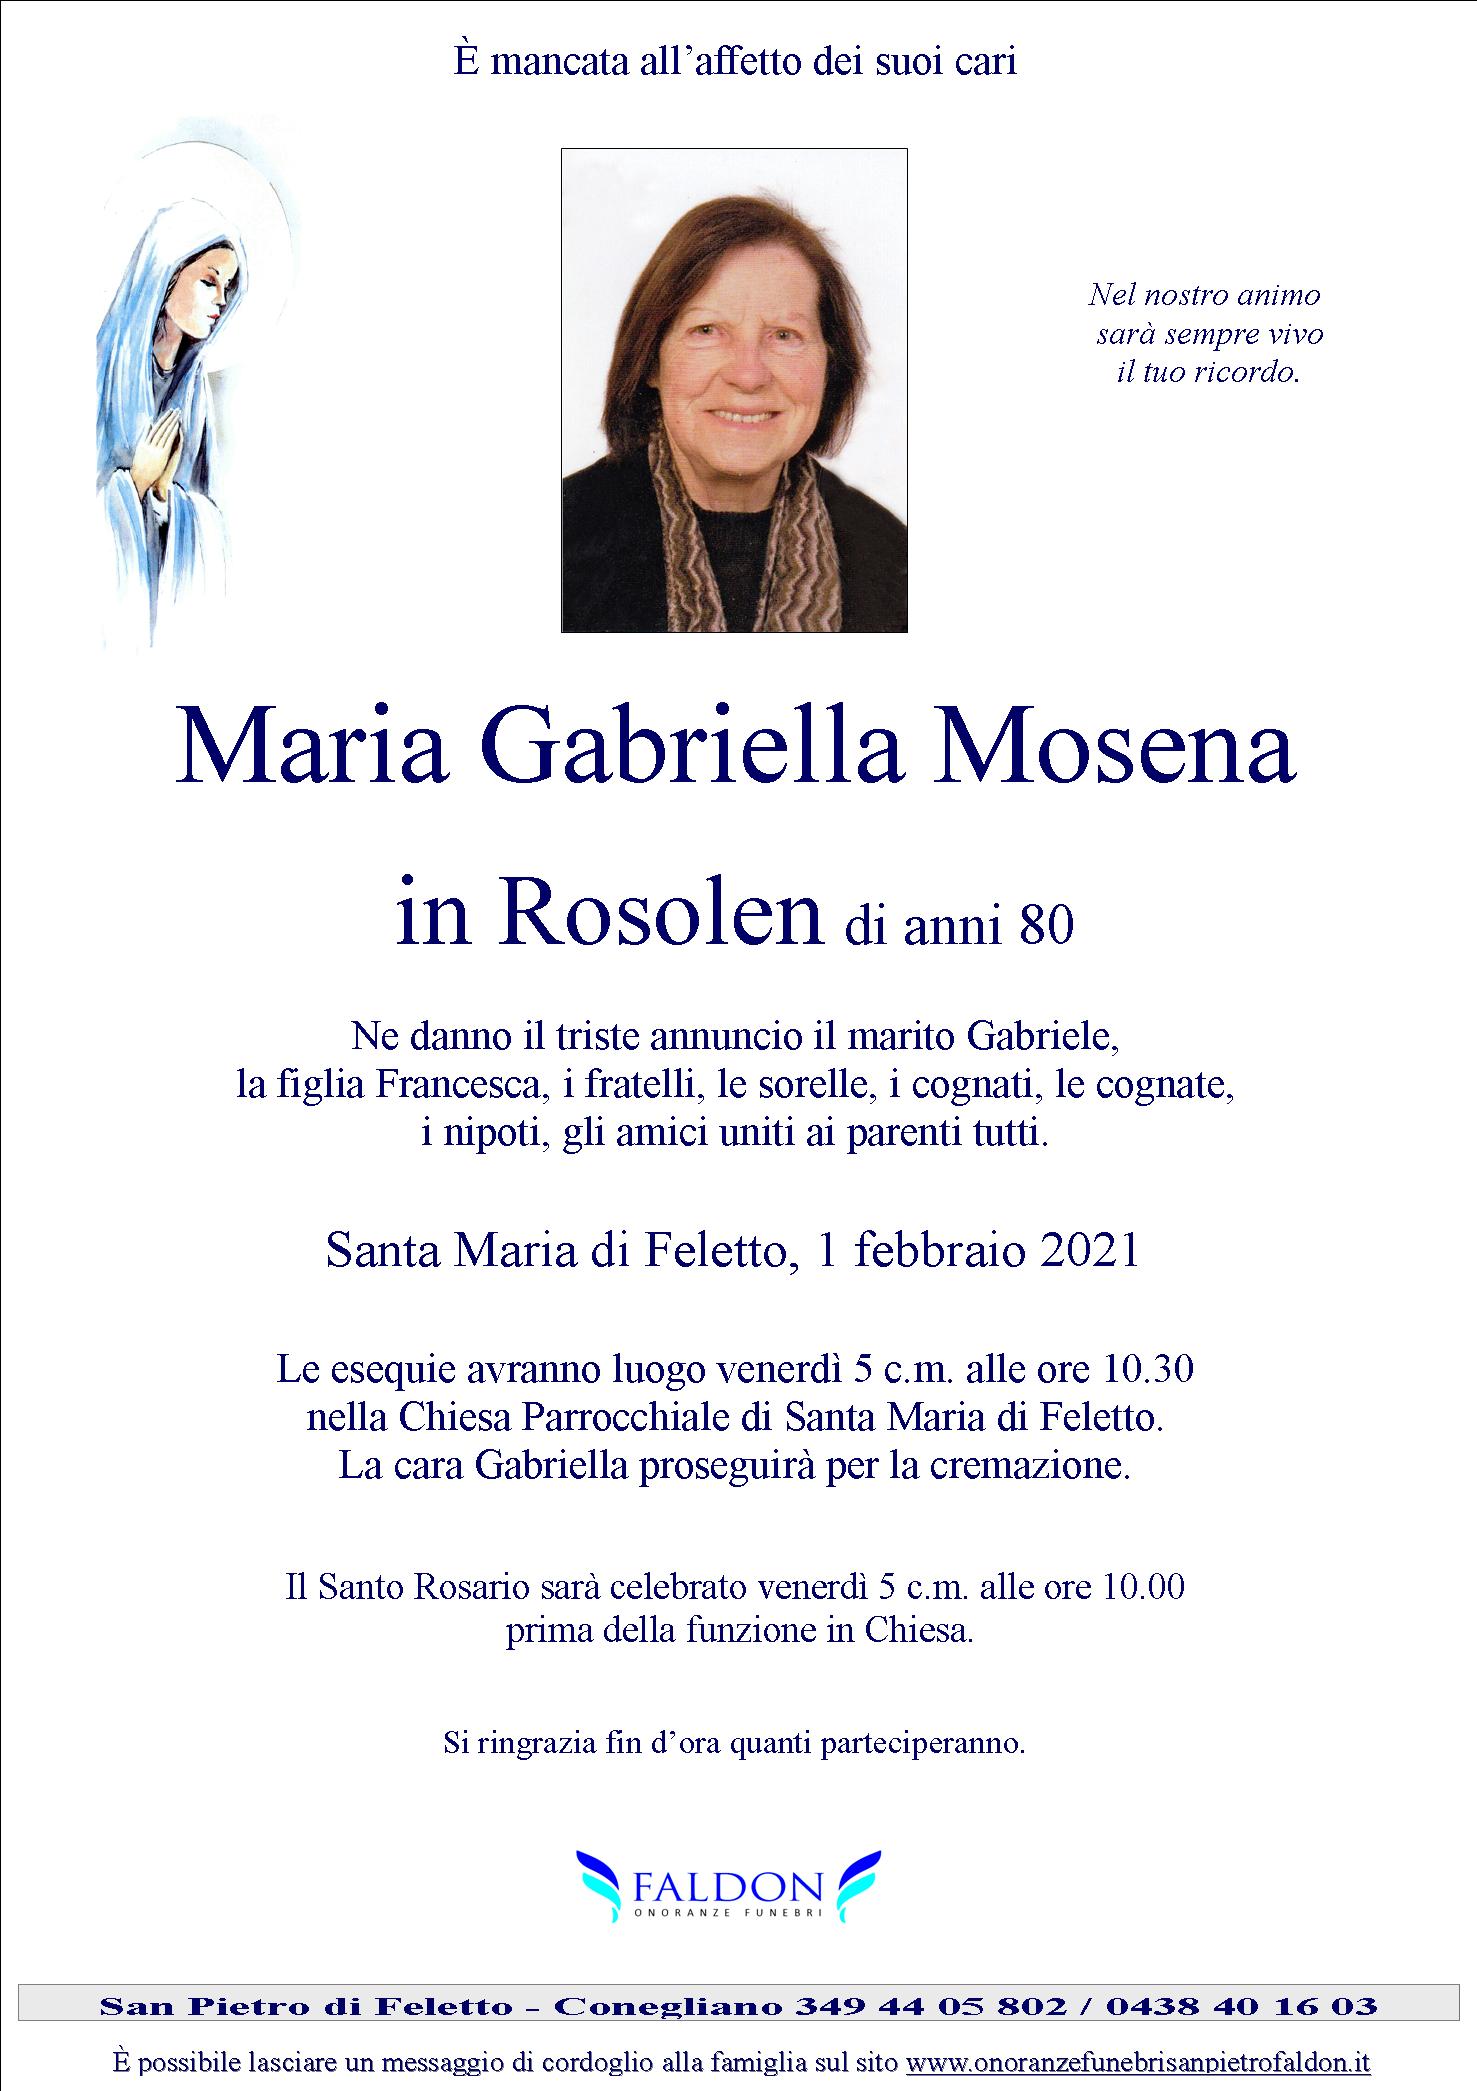 Maria Gabriella Mosena